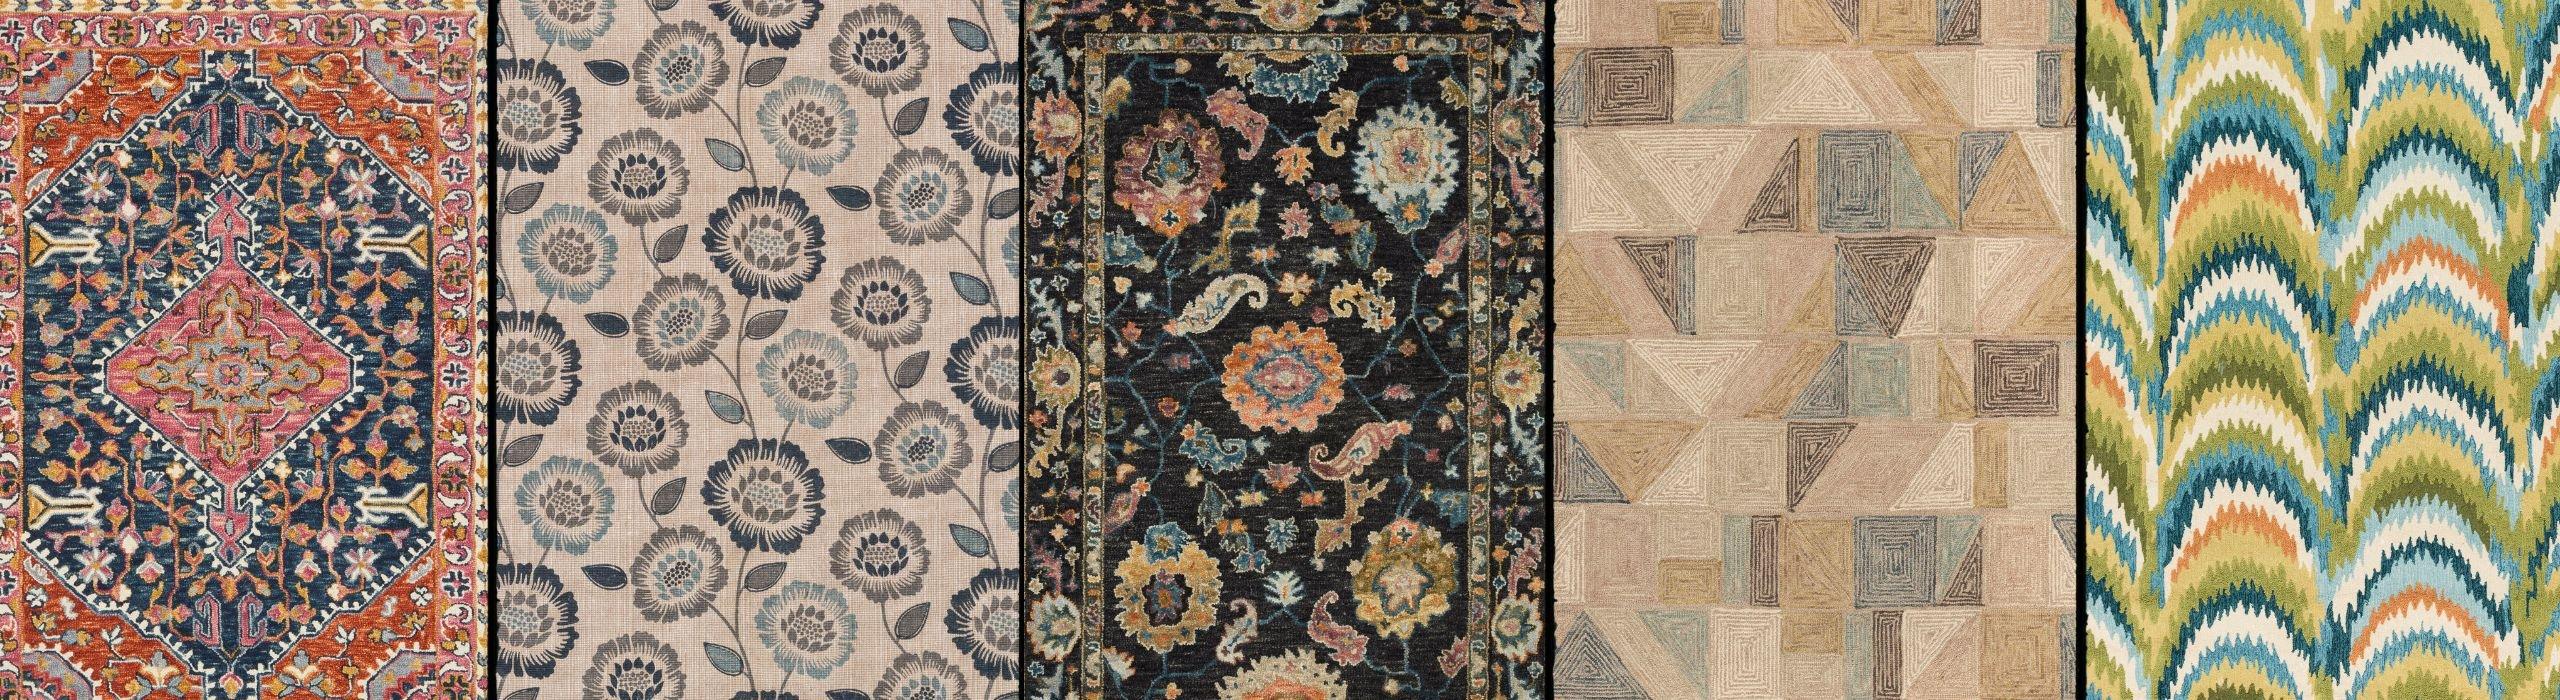 Five different rug styles popular through the decades in Cincinnati